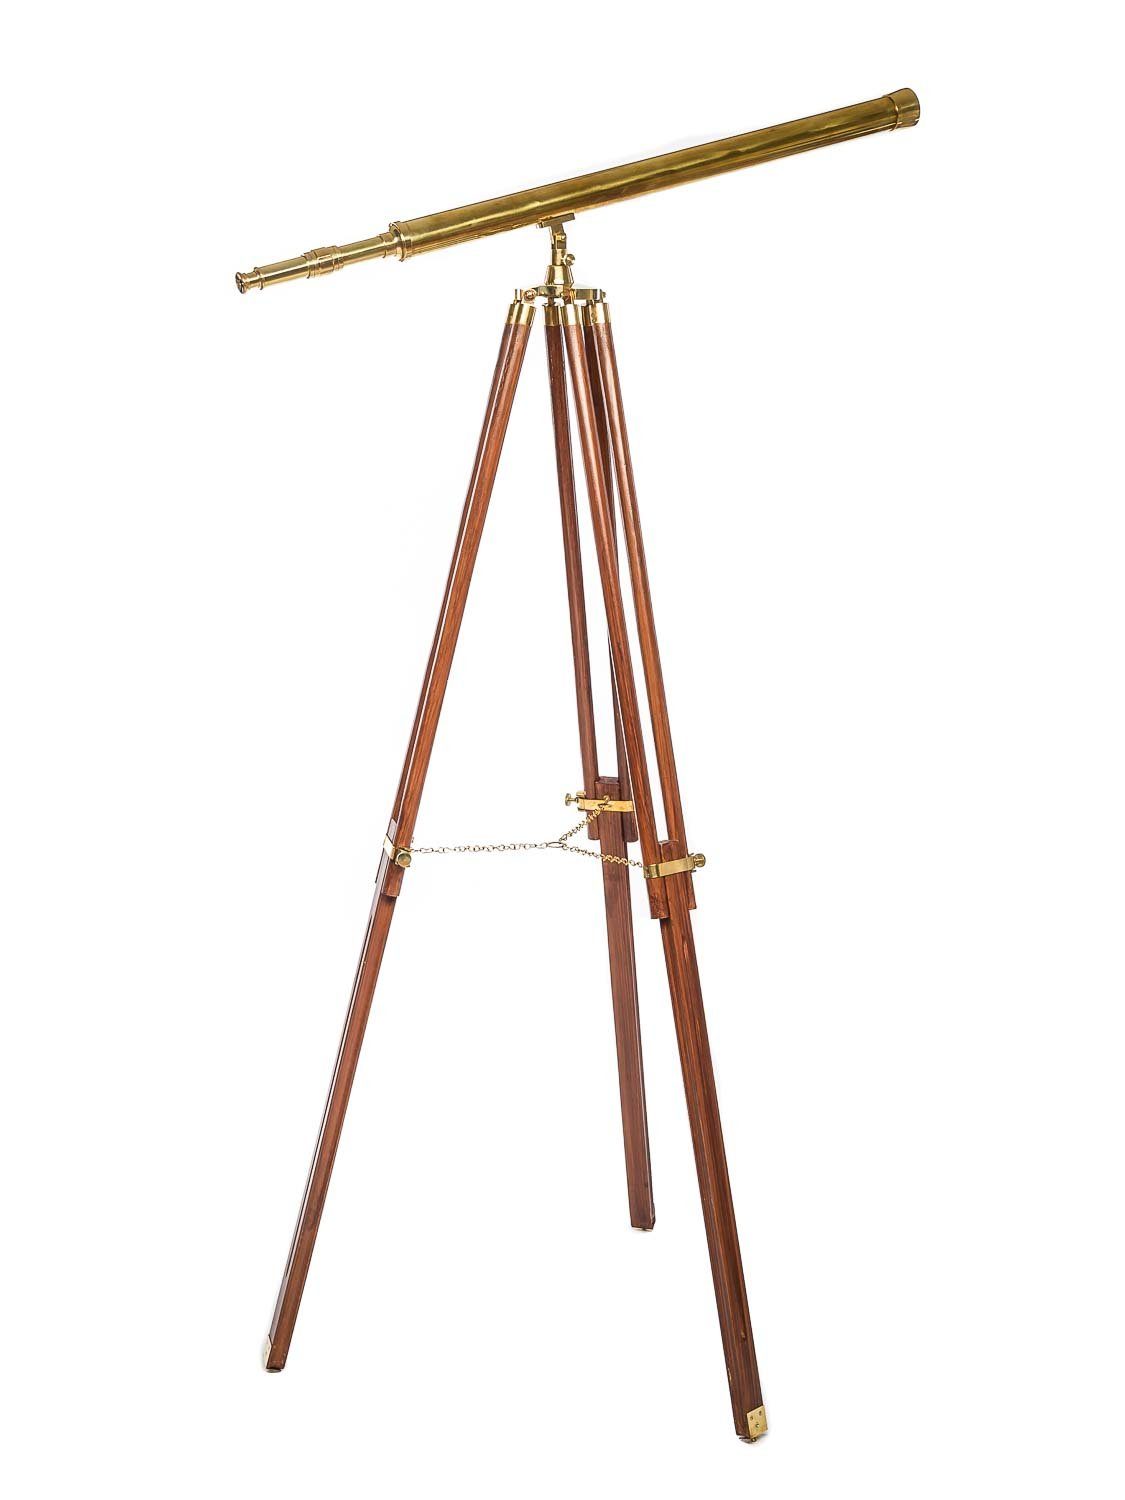 Aubaho Teleskop Großes Fernrohr Fernglas Teleskop Messing mit Holz Stativ  150cm antik Stil